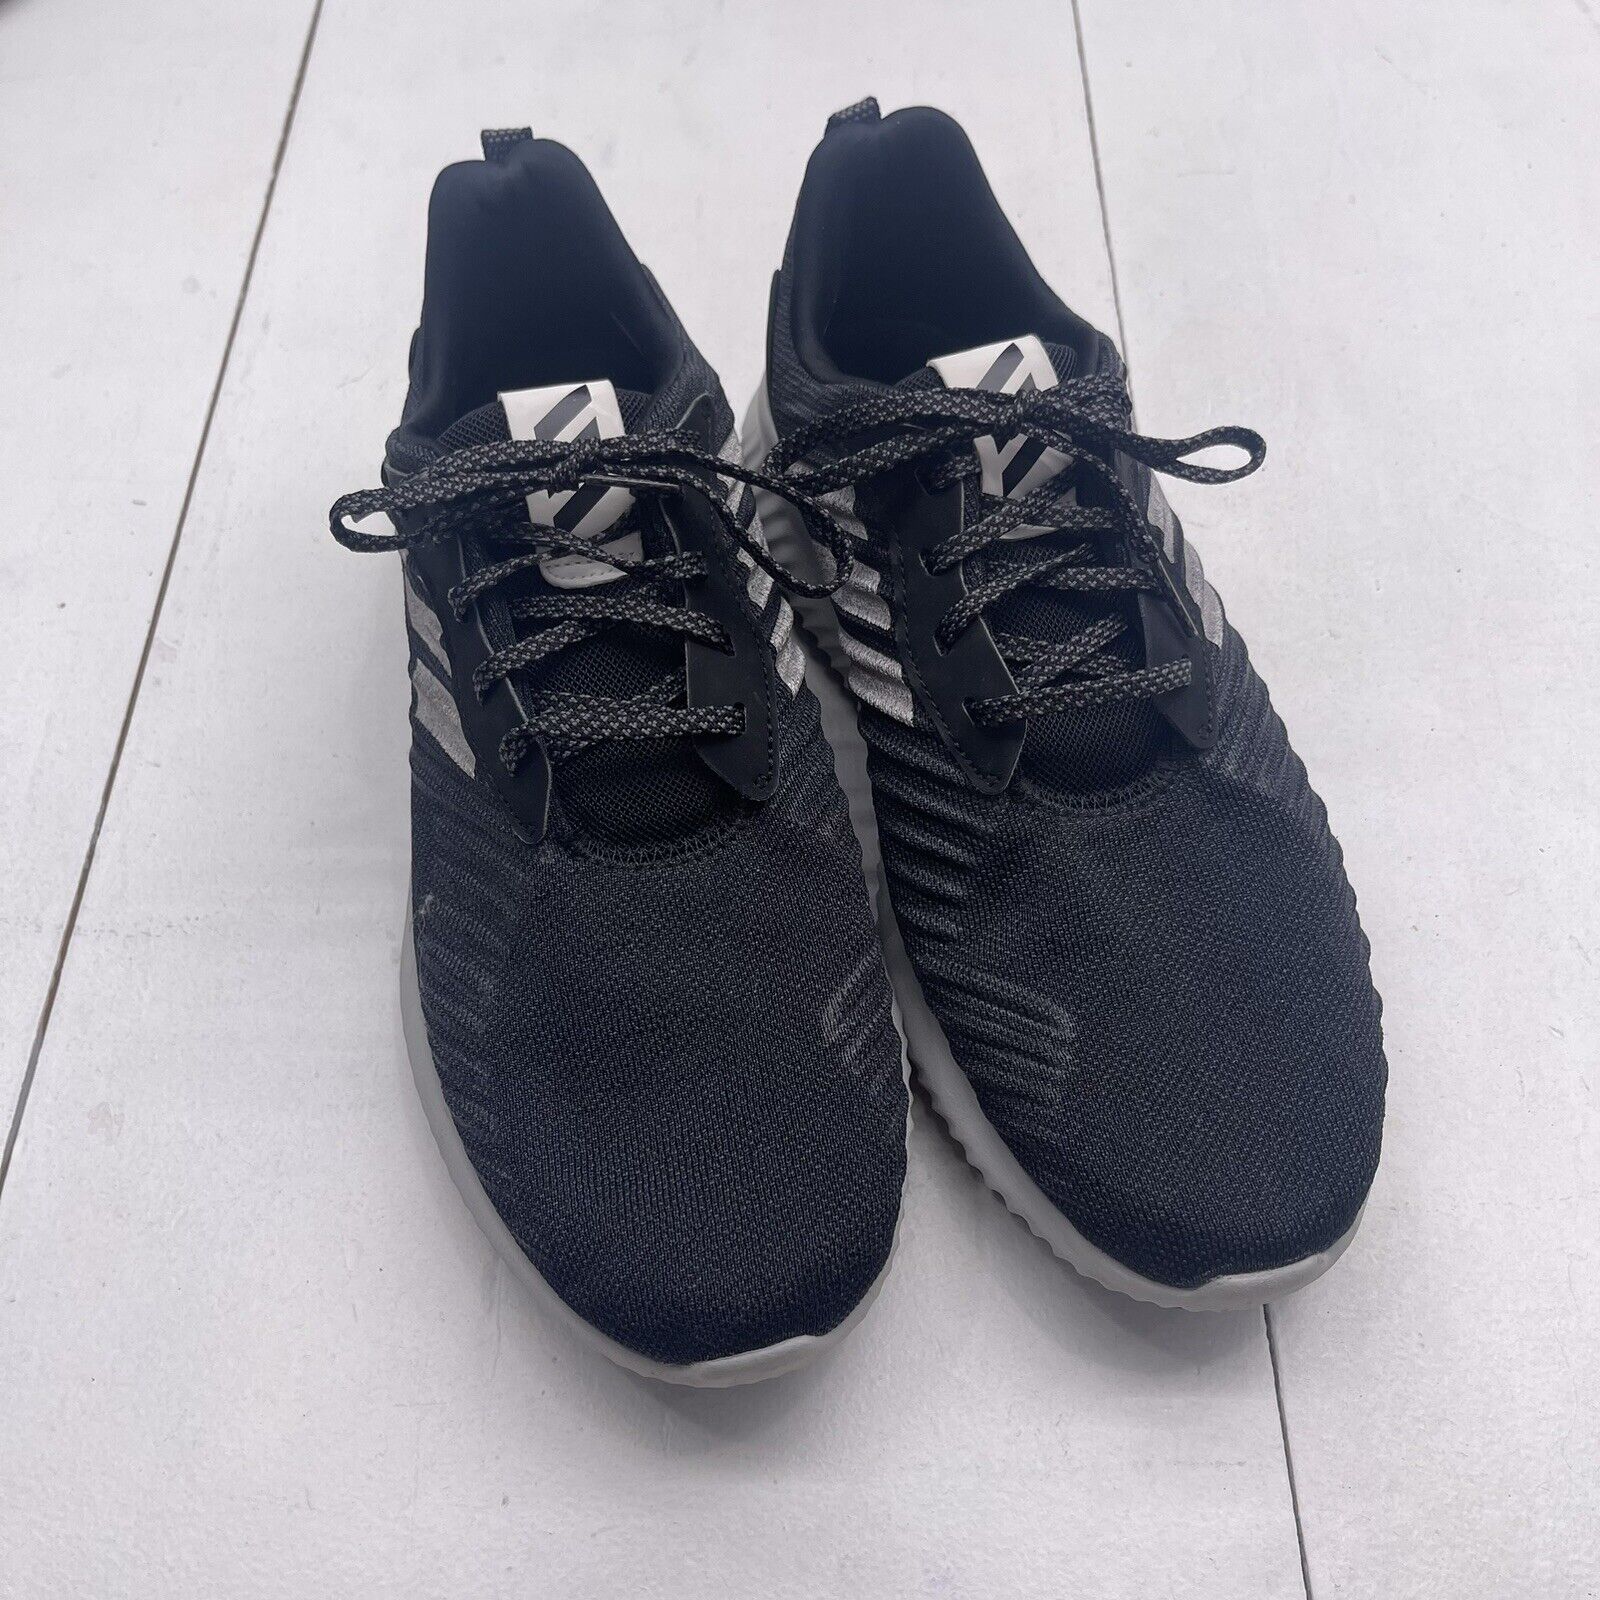 Adidas Alphabounce RC Black Running Shoes Mens Size 9.5 DA9768